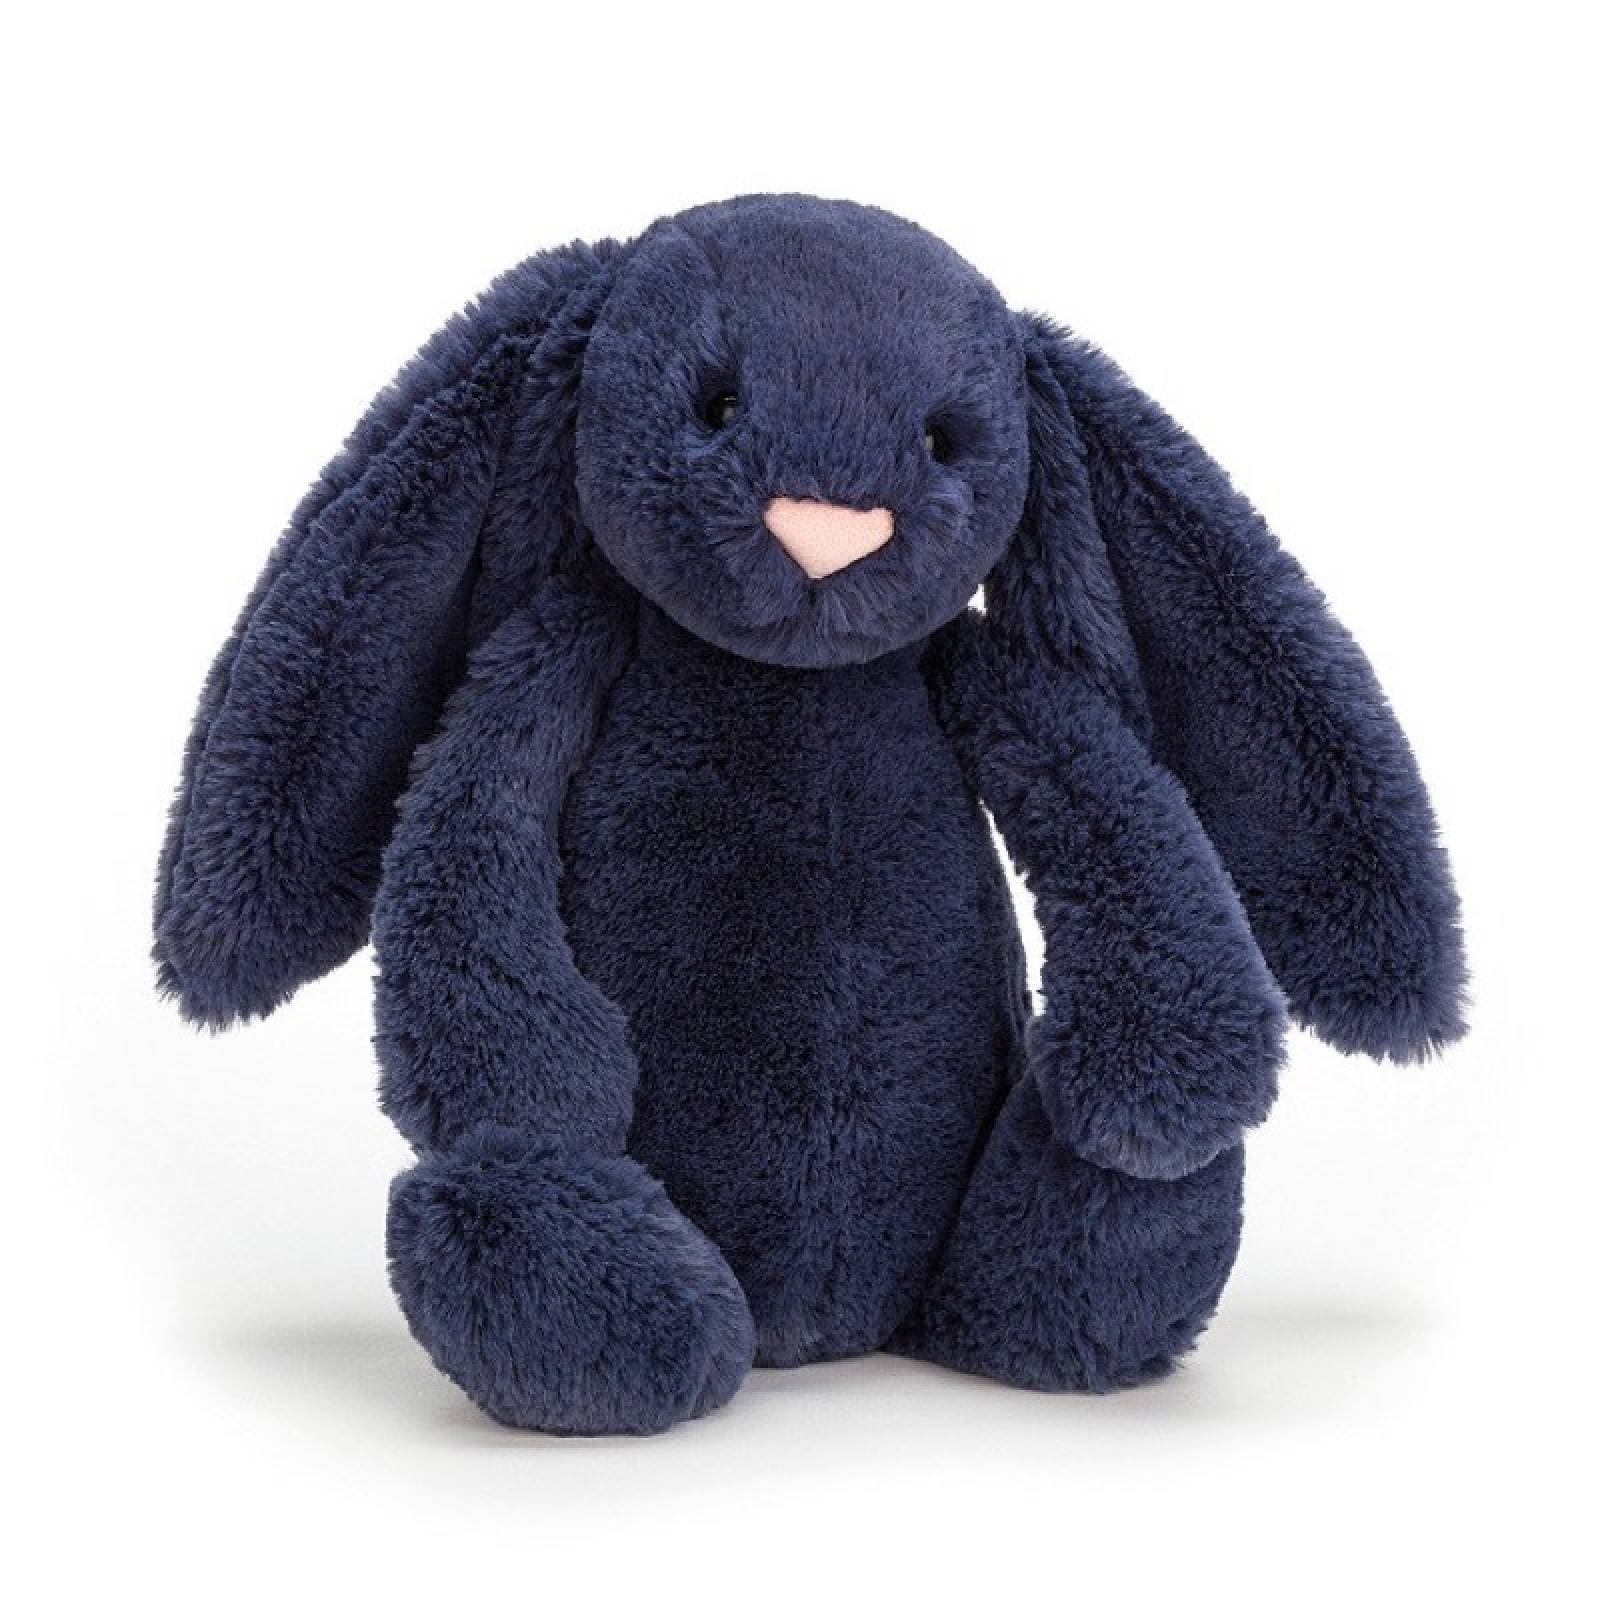 Medium Bashful Bunny In Navy Soft Toy By Jellycat